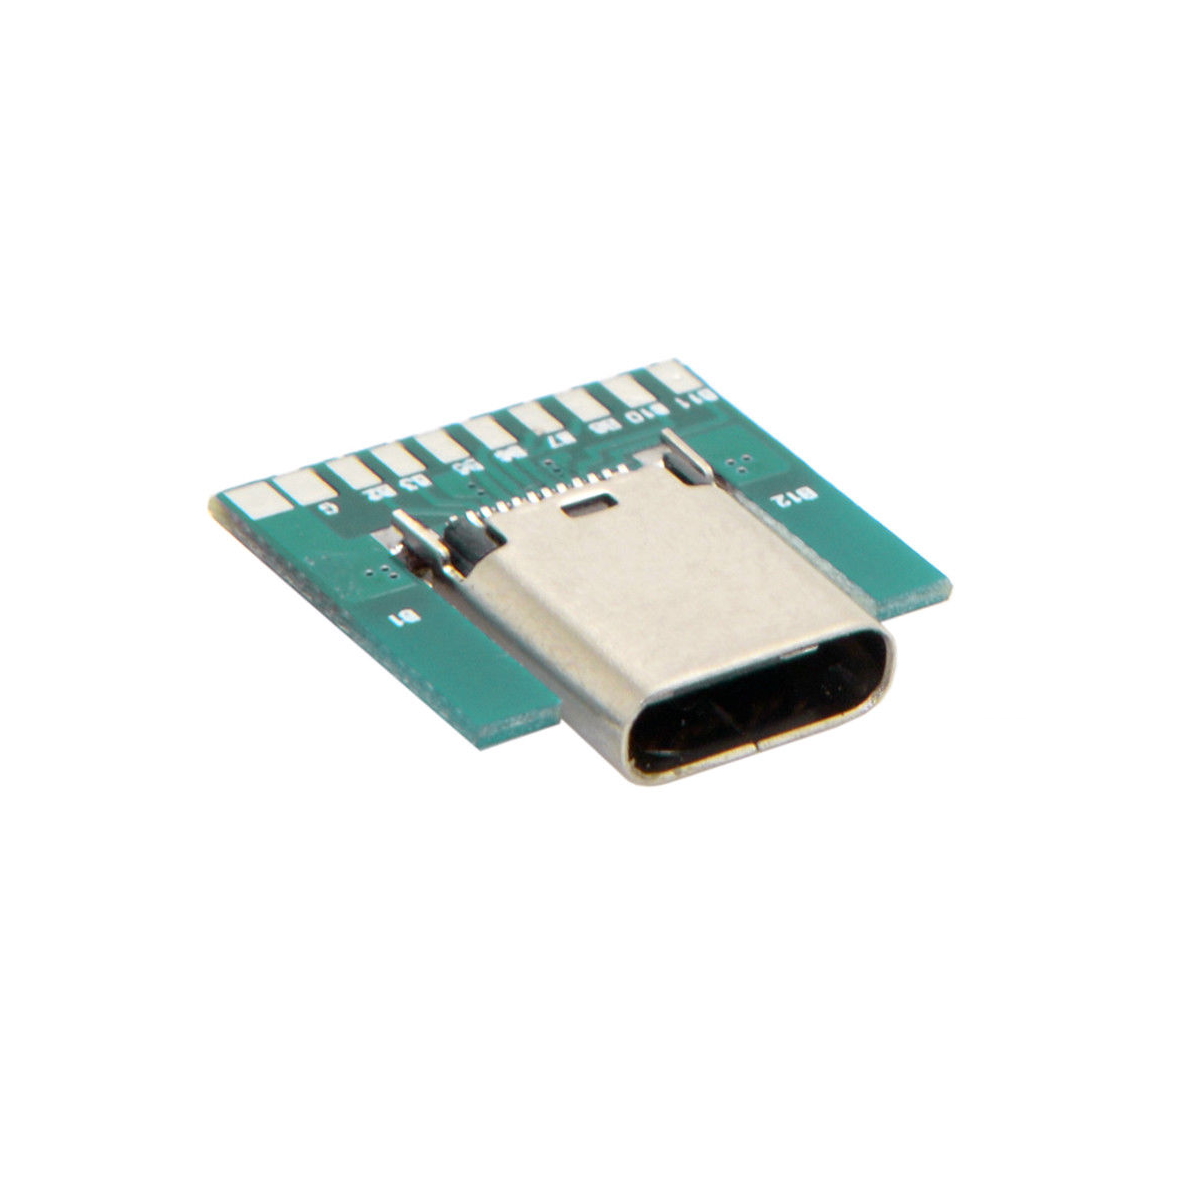 USB: Conector USB 3.1 tipo C hembra. 6 pines